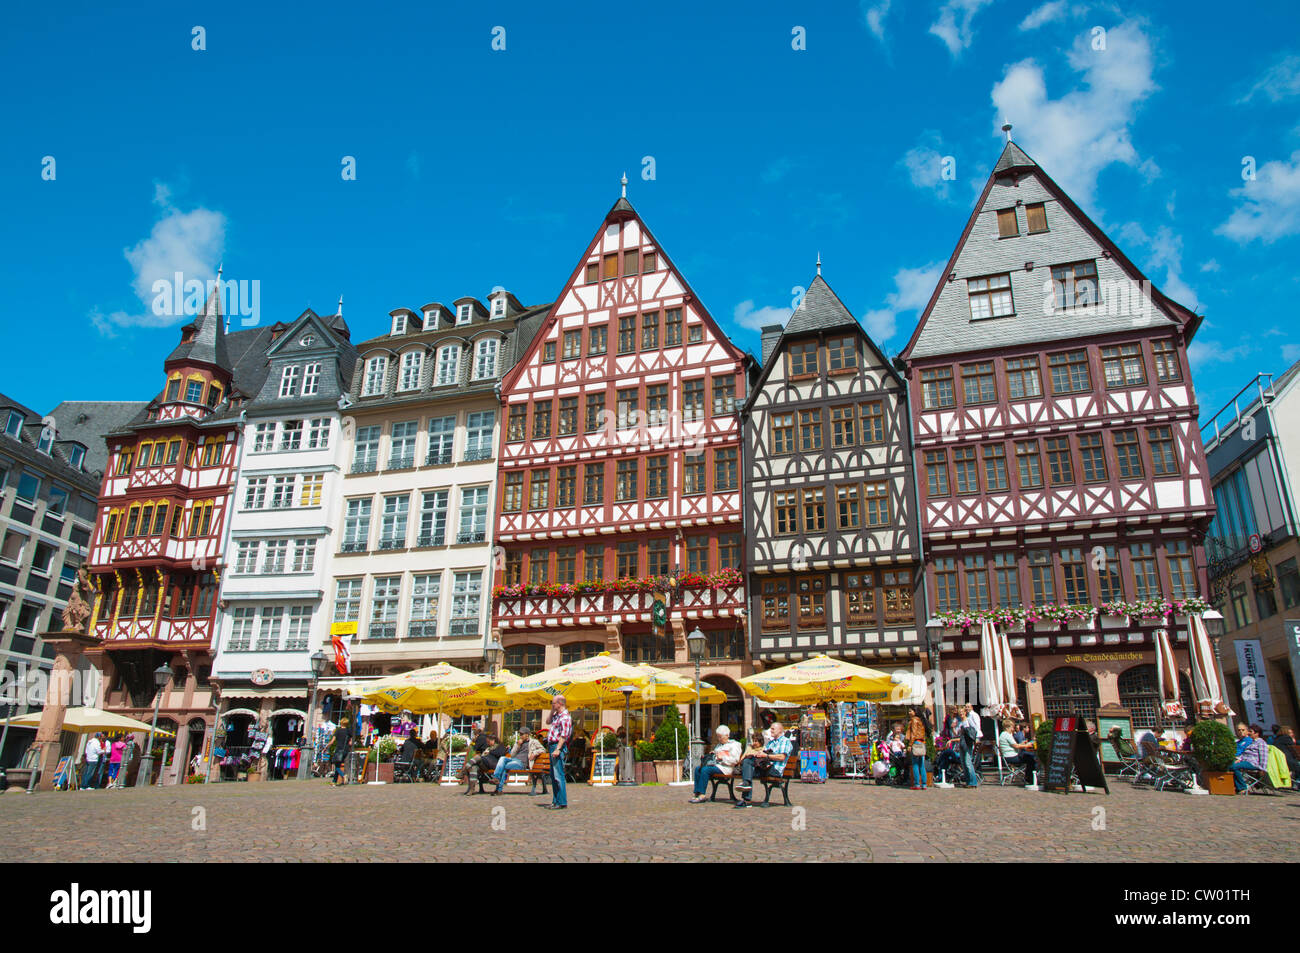 La Plaza Römerberg Altstadt el la ciudad vieja de Frankfurt am Main, Alemania Europa estado de Hesse. Foto de stock